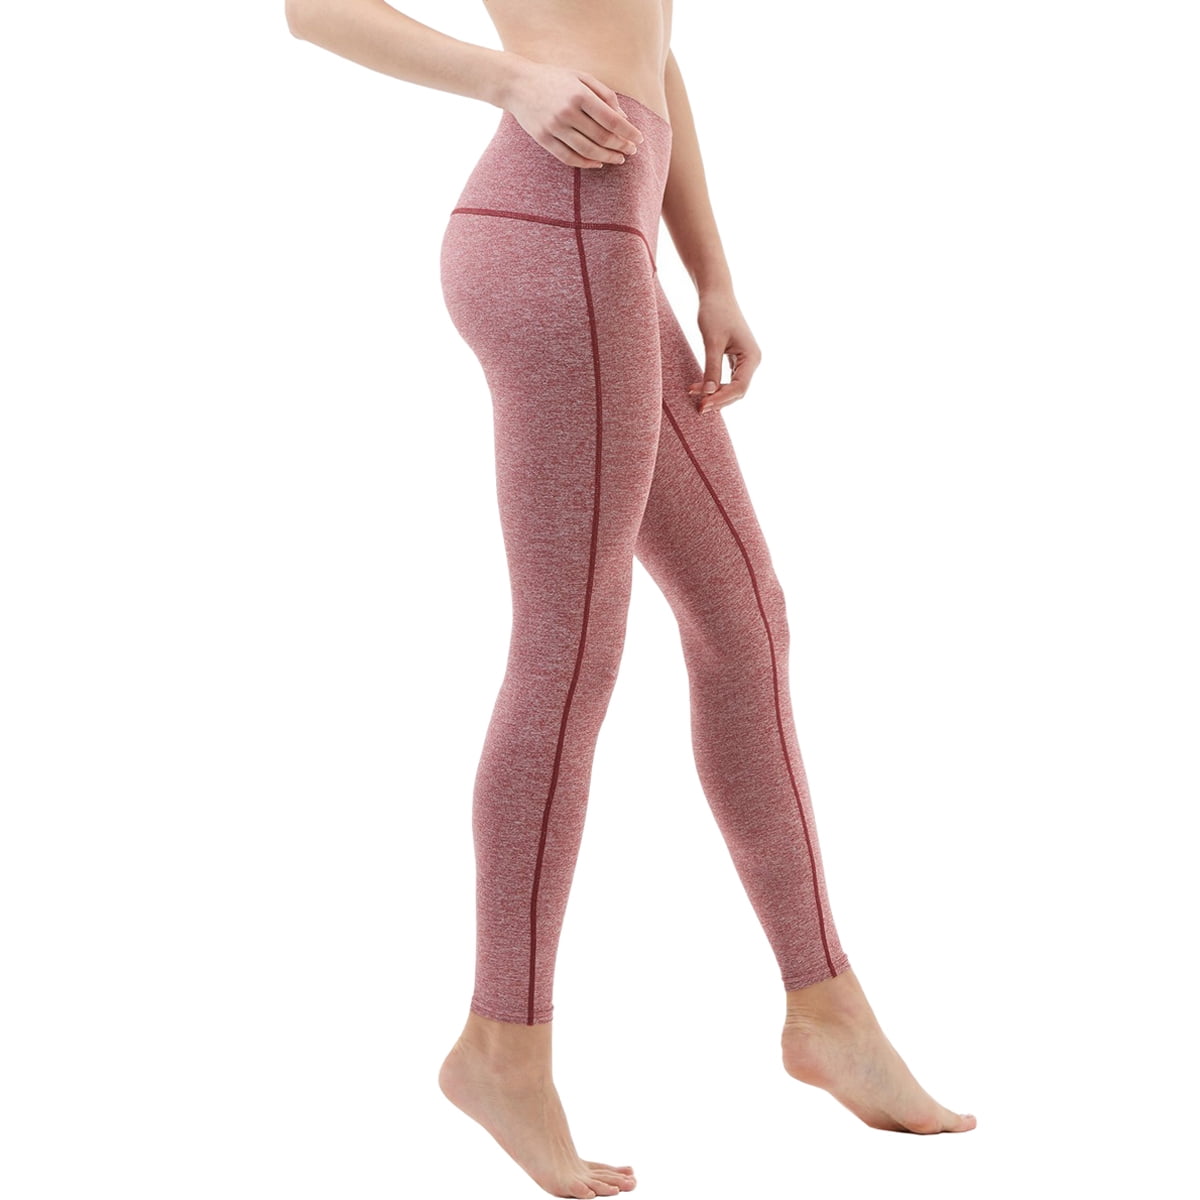 TSLA Tesla FYP42 Women's Tummy Control Yoga Pants - XS - Space Dye/Red